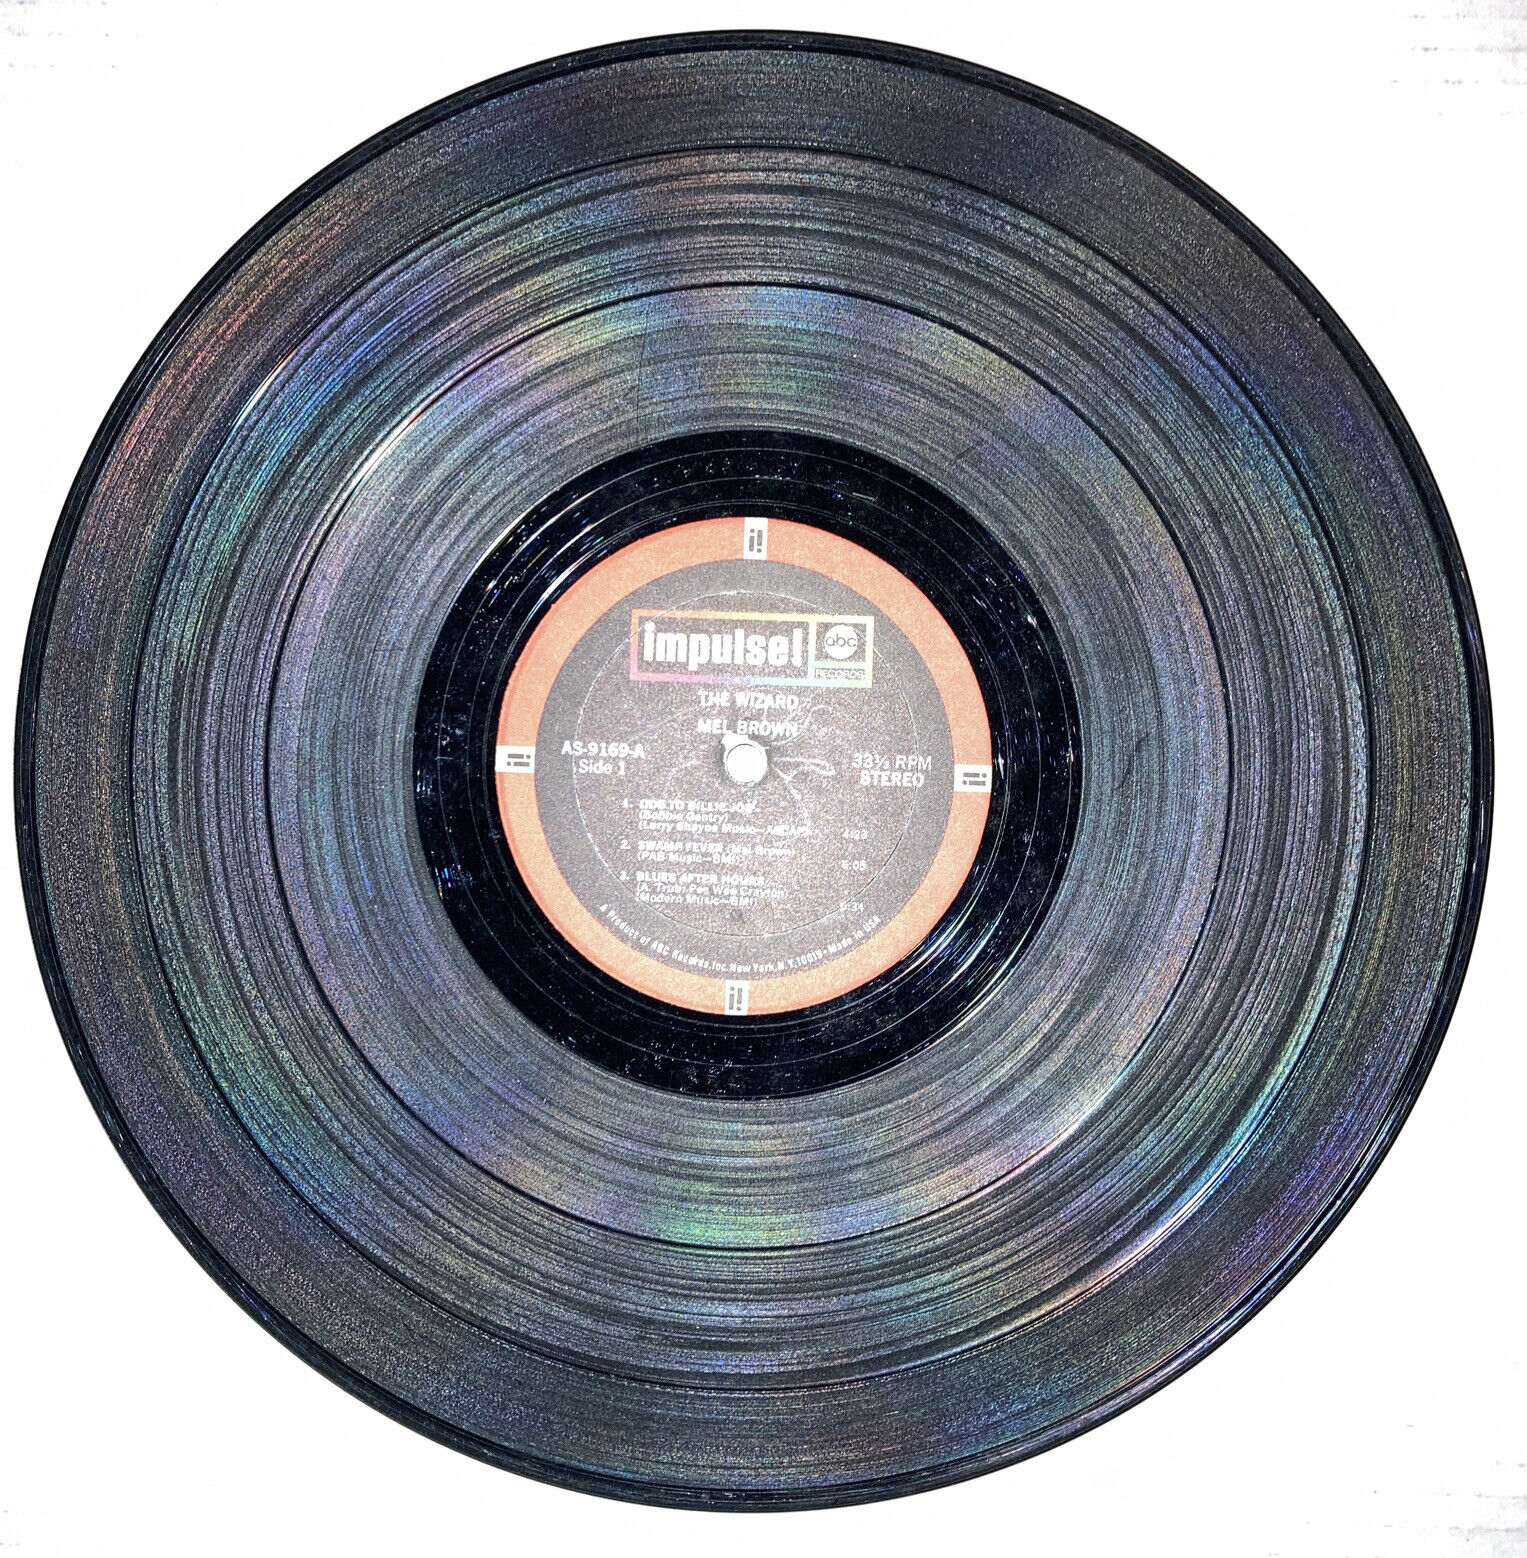 MEL BROWN The Wizard LP VG+ Plays Well 1968 Impulse ABC AS-9169 Vinyl GF Funk